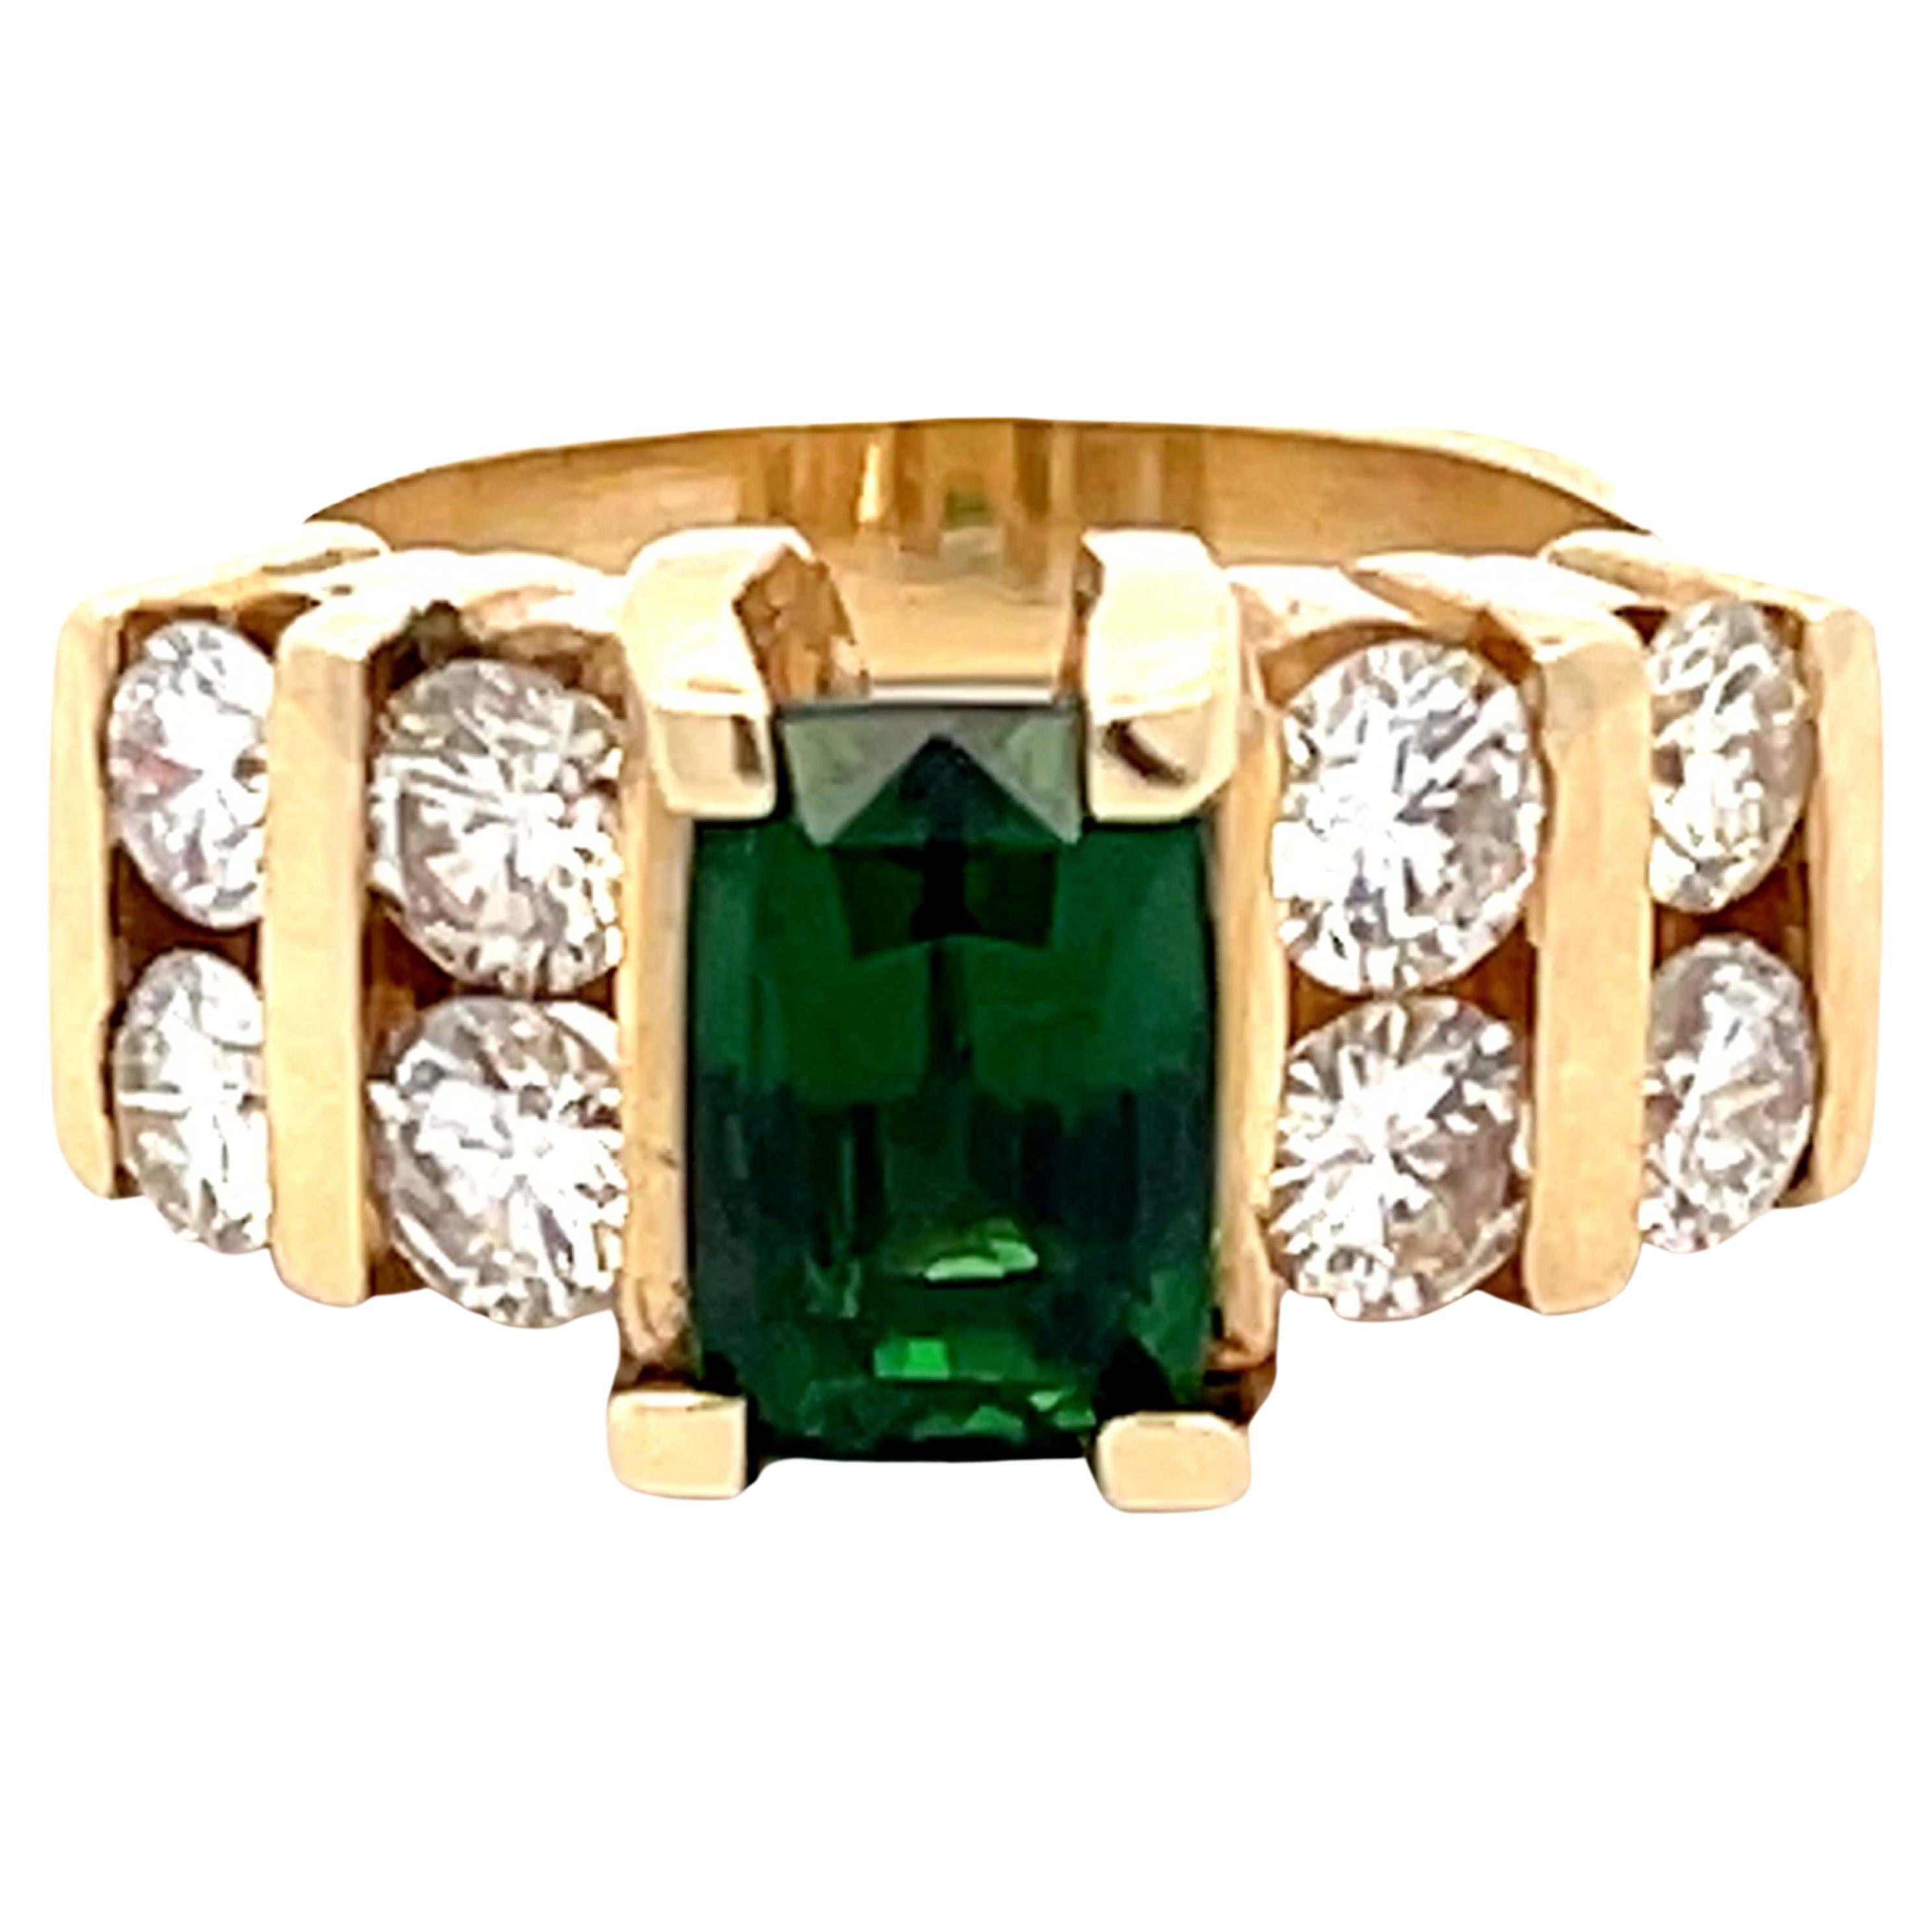 GIA Green Tsavorite Garnet and Diamond Ring in 14k Yellow Gold